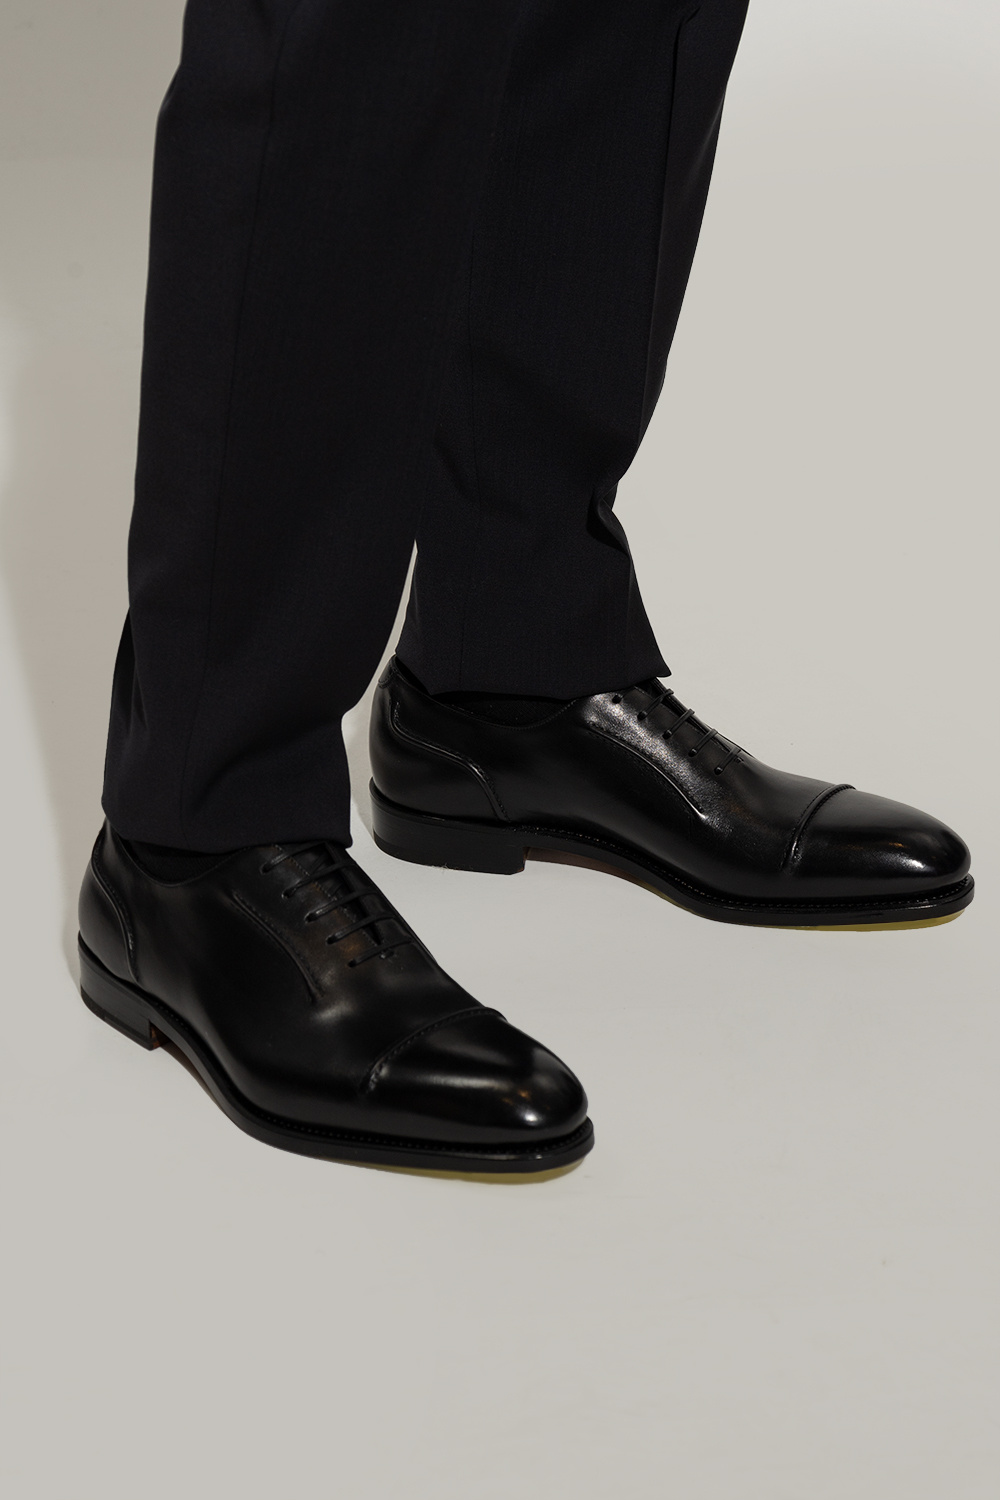 Salvatore Ferragamo ‘Giave’ leather shoes